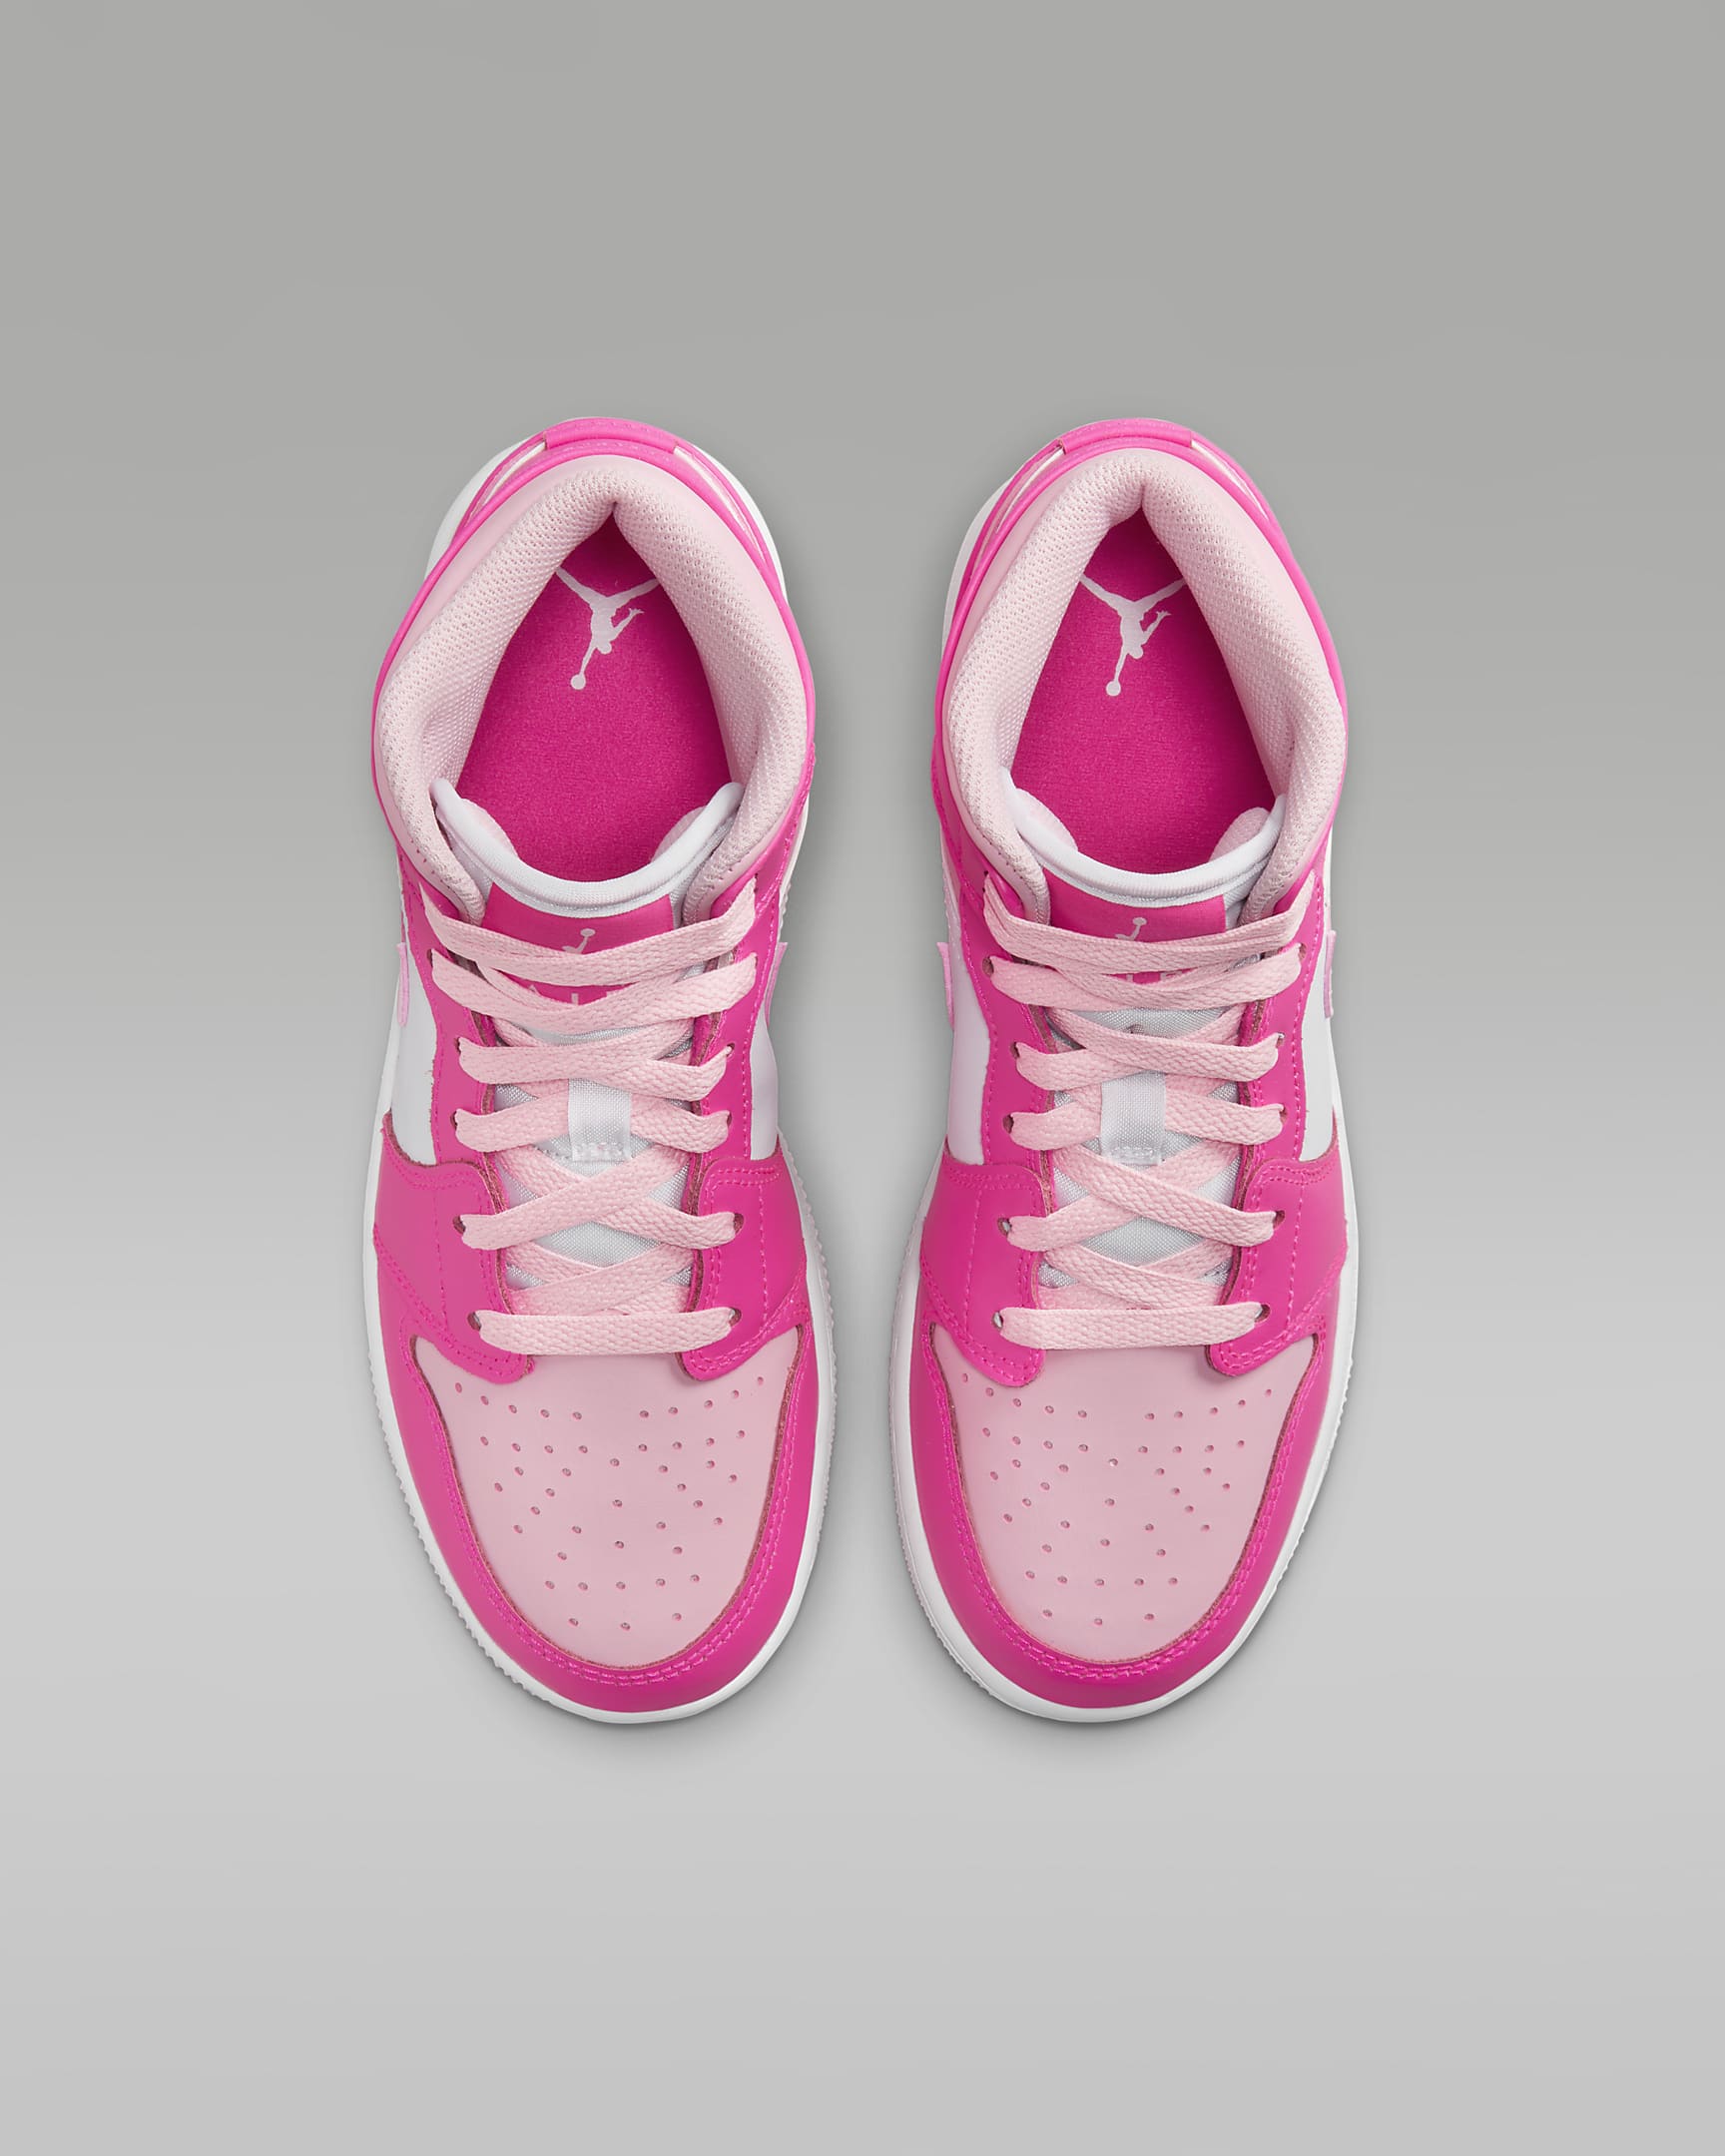 Air Jordan 1 Mid Schuh für ältere Kinder - Weiß/Fierce Pink/Medium Soft Pink